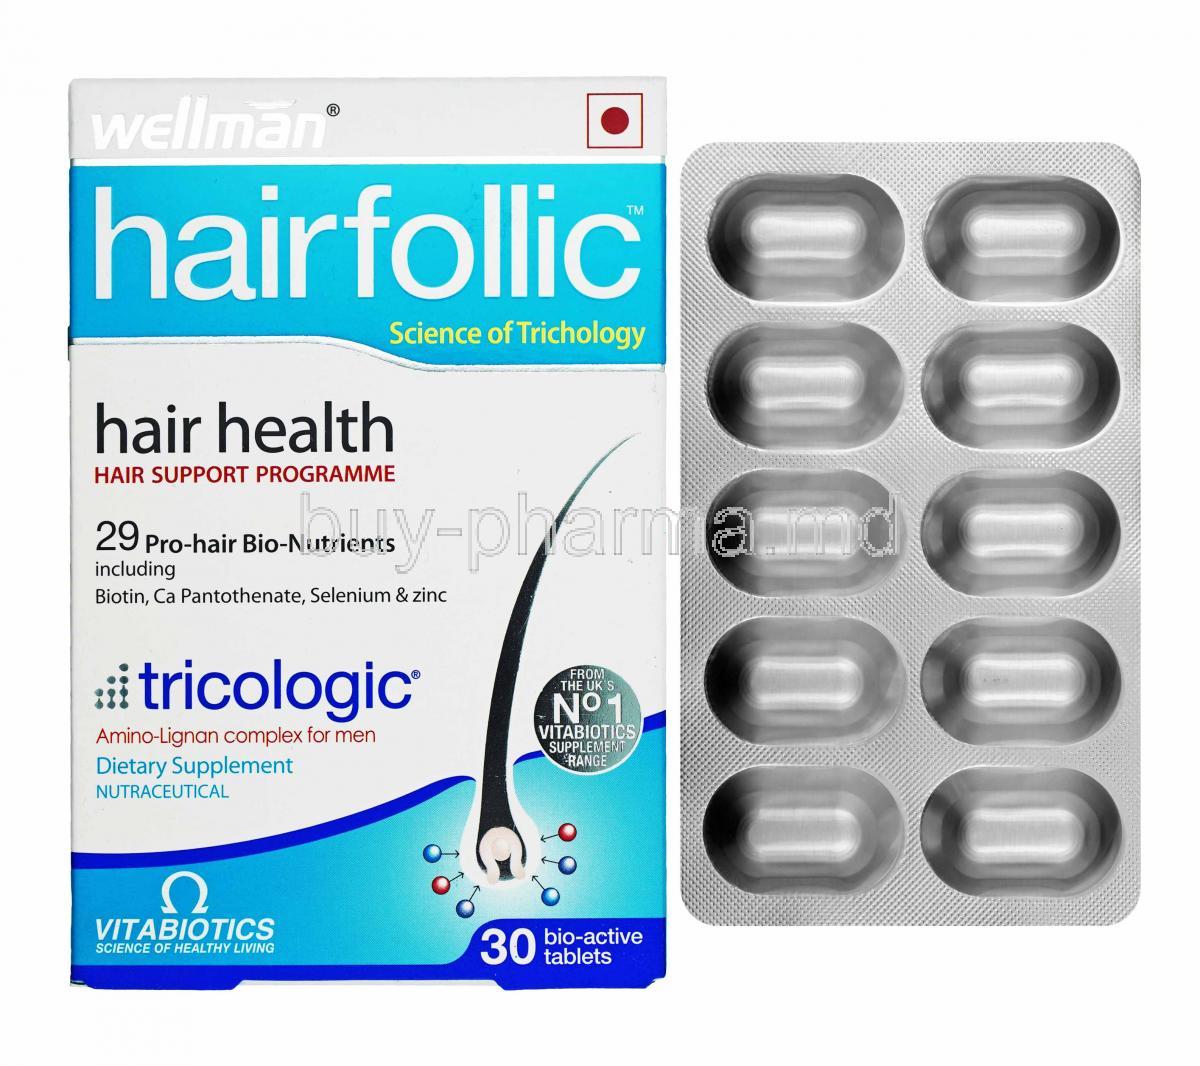 Wellman Hairfollic box and tablets